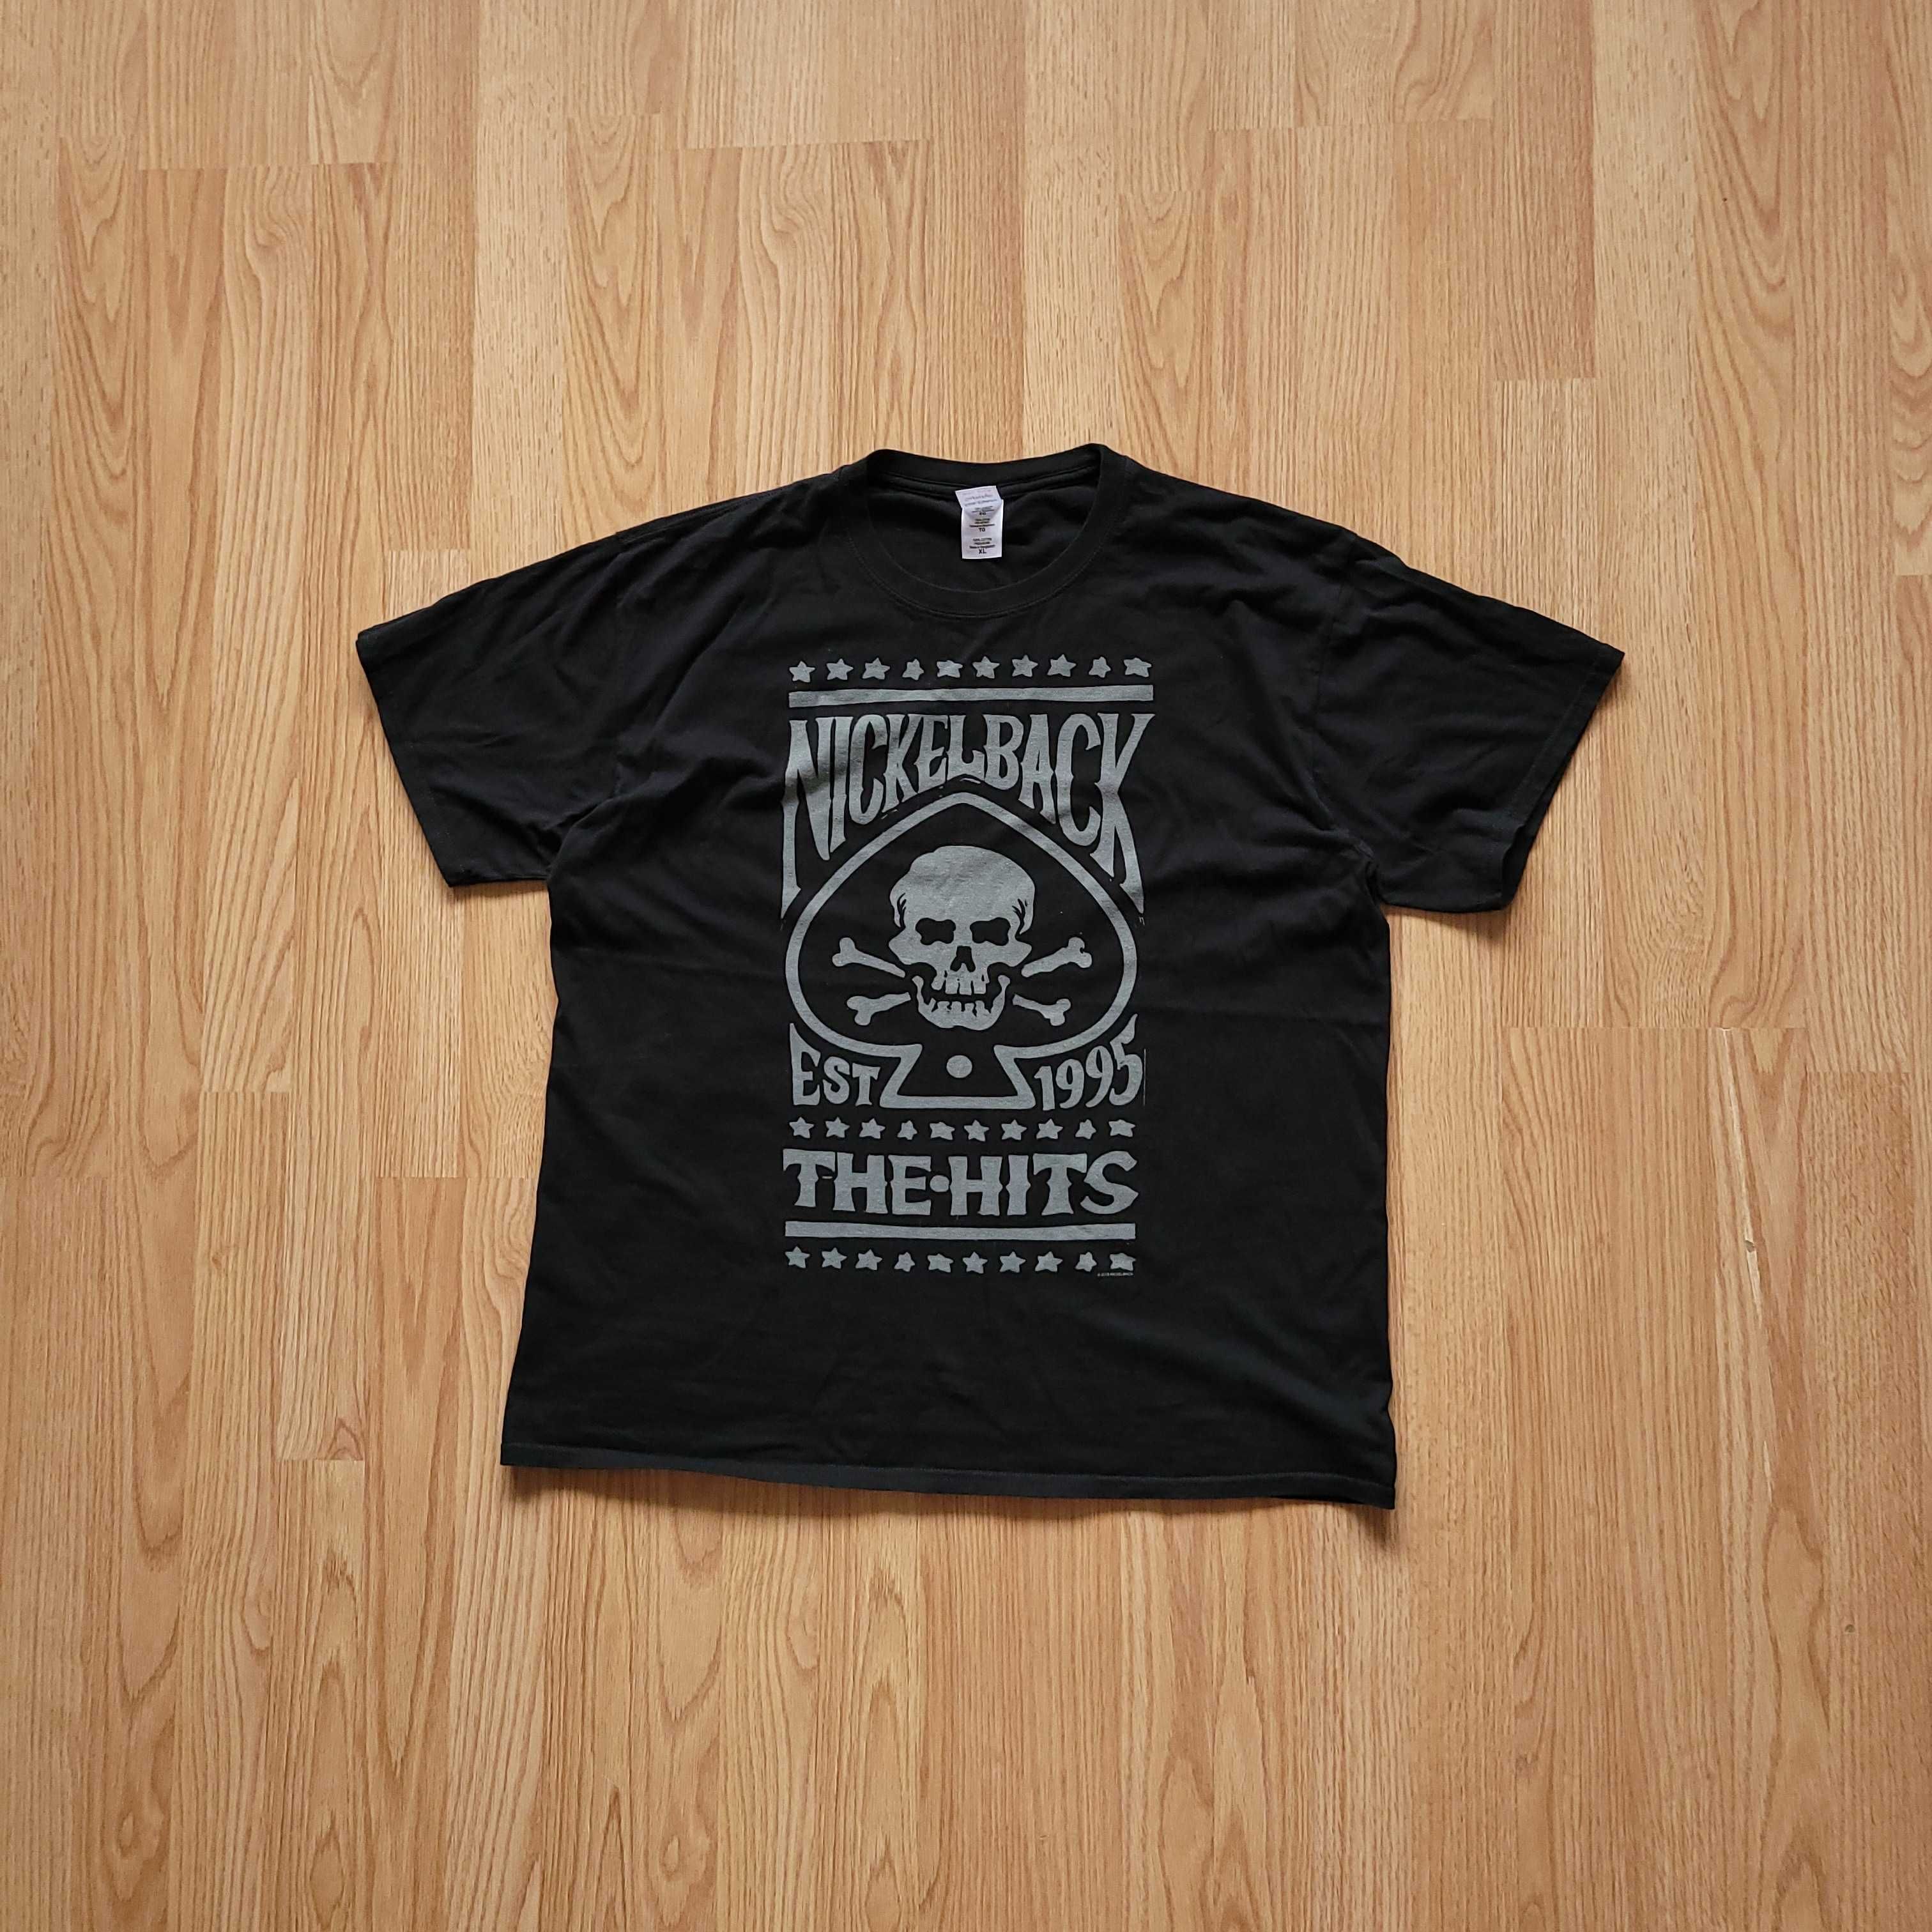 T-shirt Nickelback 2013 Tour XL